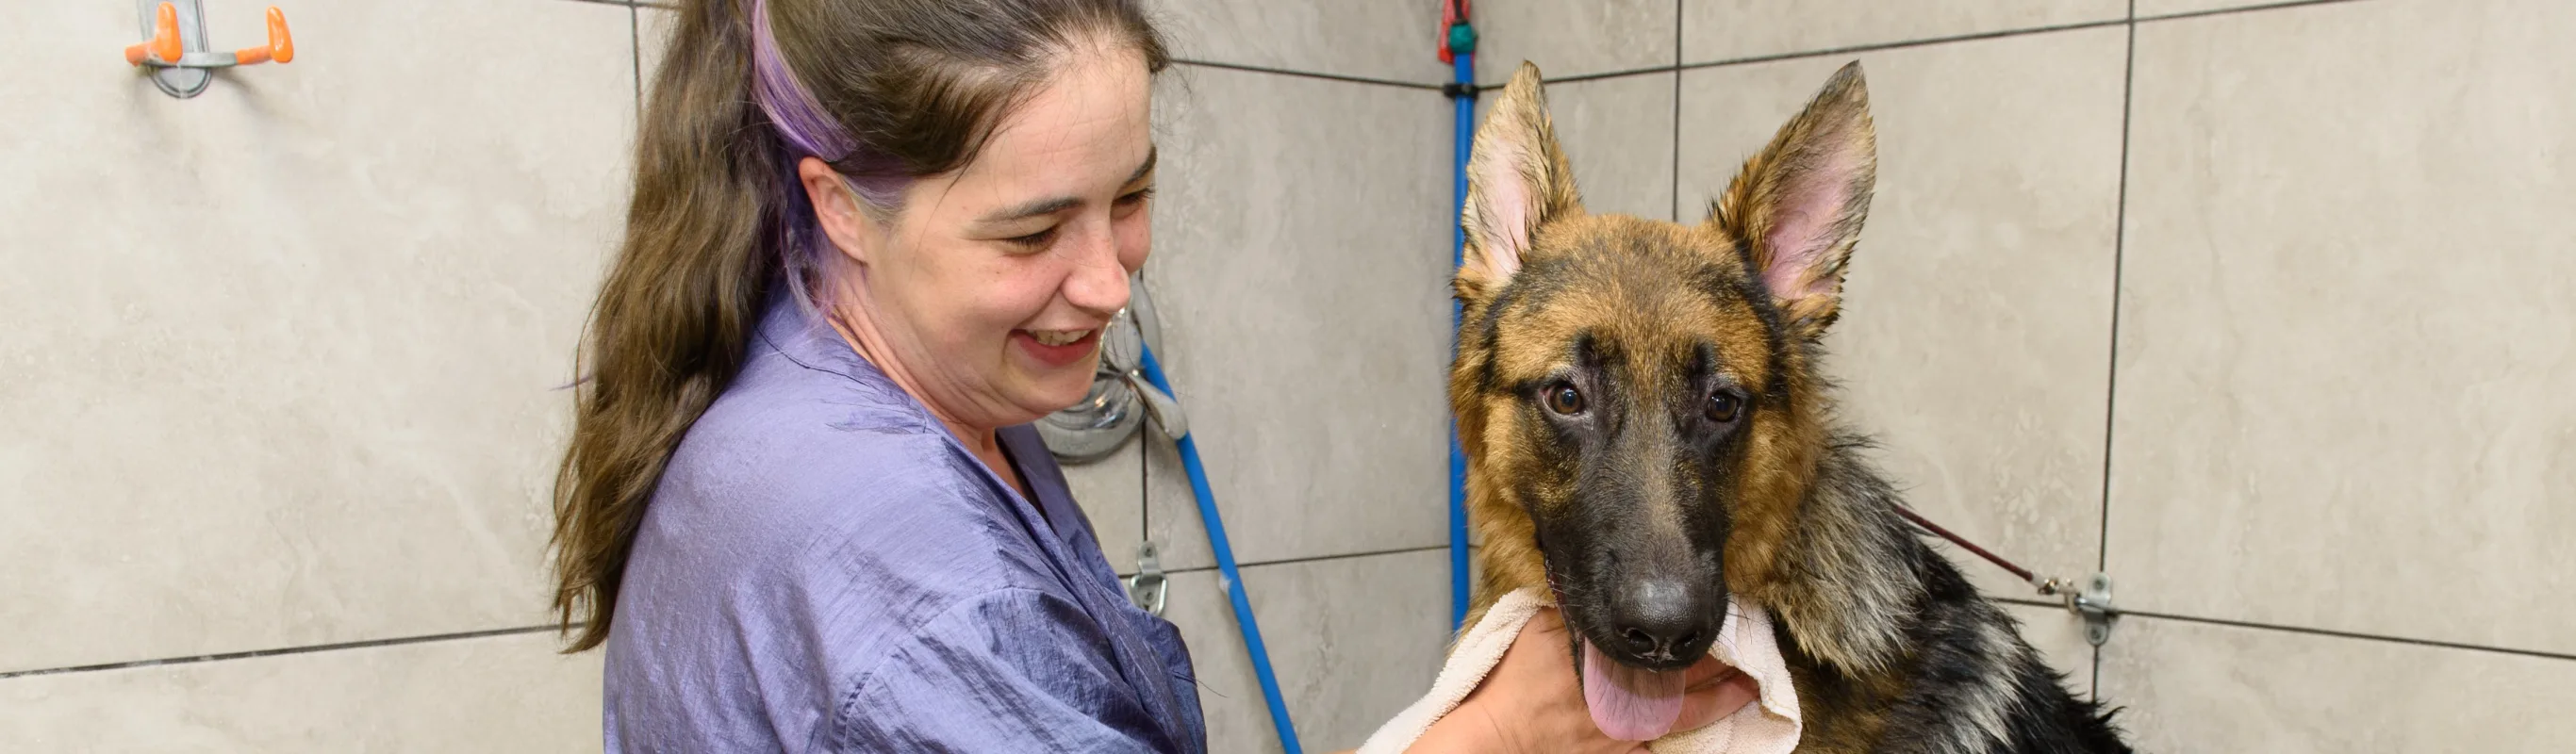 Groomer toweling a dog dry at South Suburban Animal Hospital